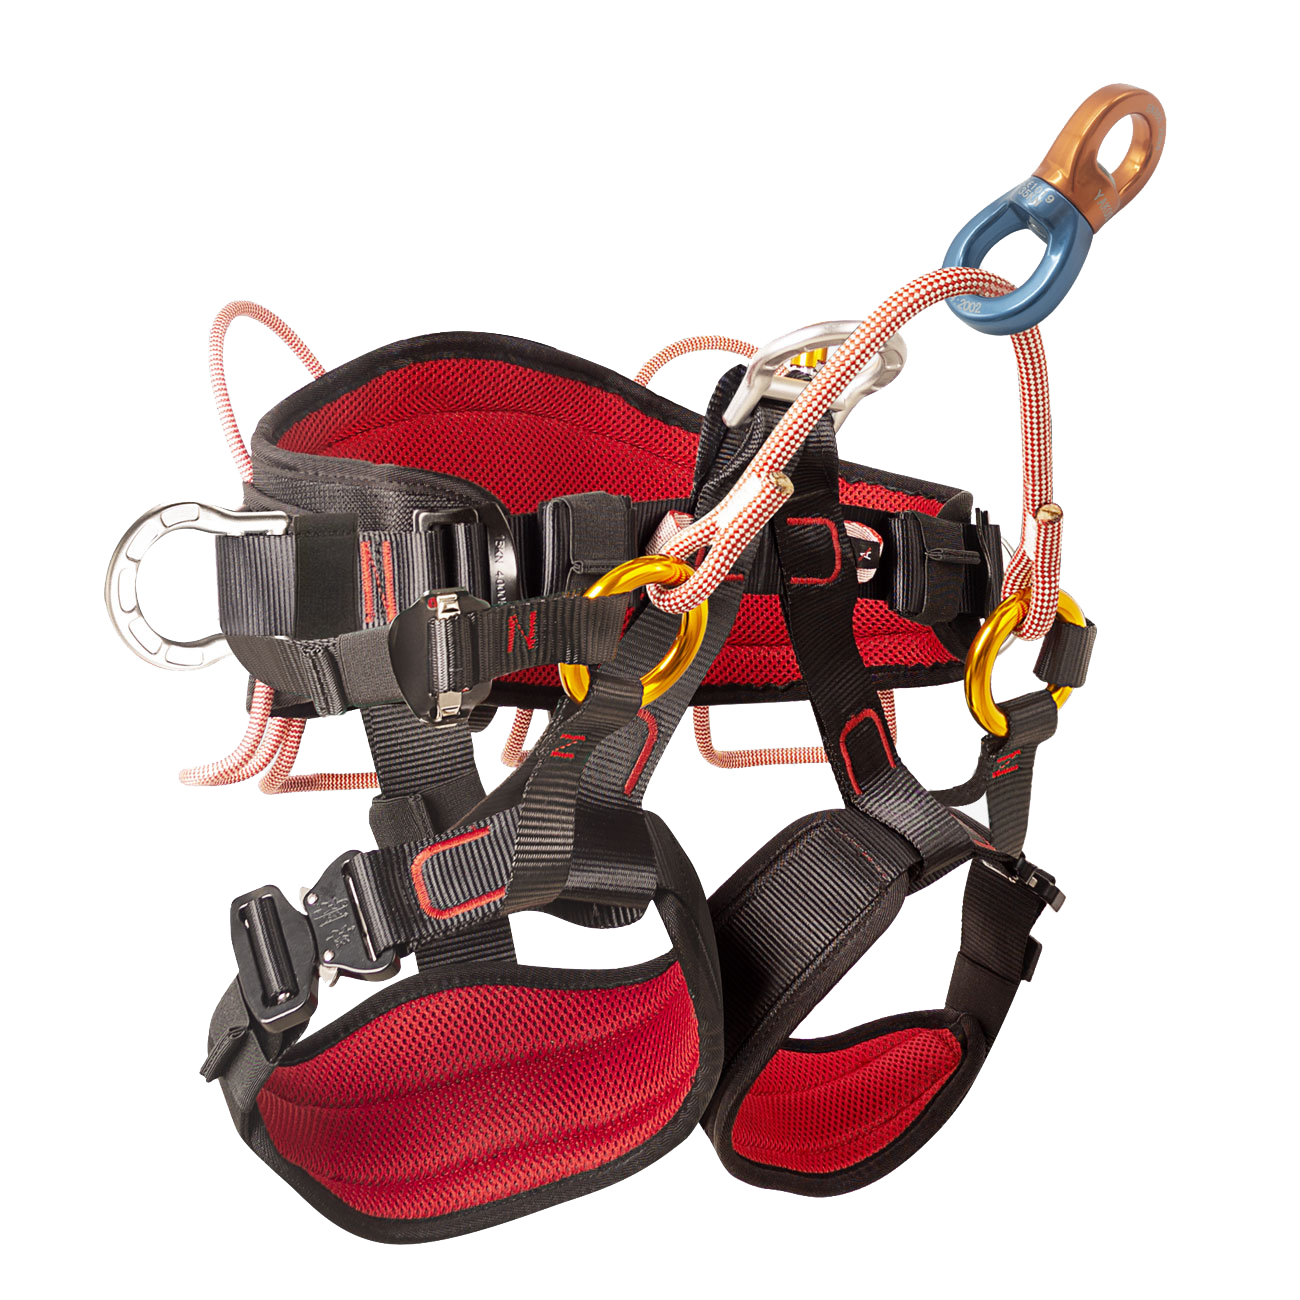 Culpeo ARBORIST SIT HBH009 Garden Aerial Work Tree Climbing Harness SRT Rope Rescue Half Body Seat Belt 